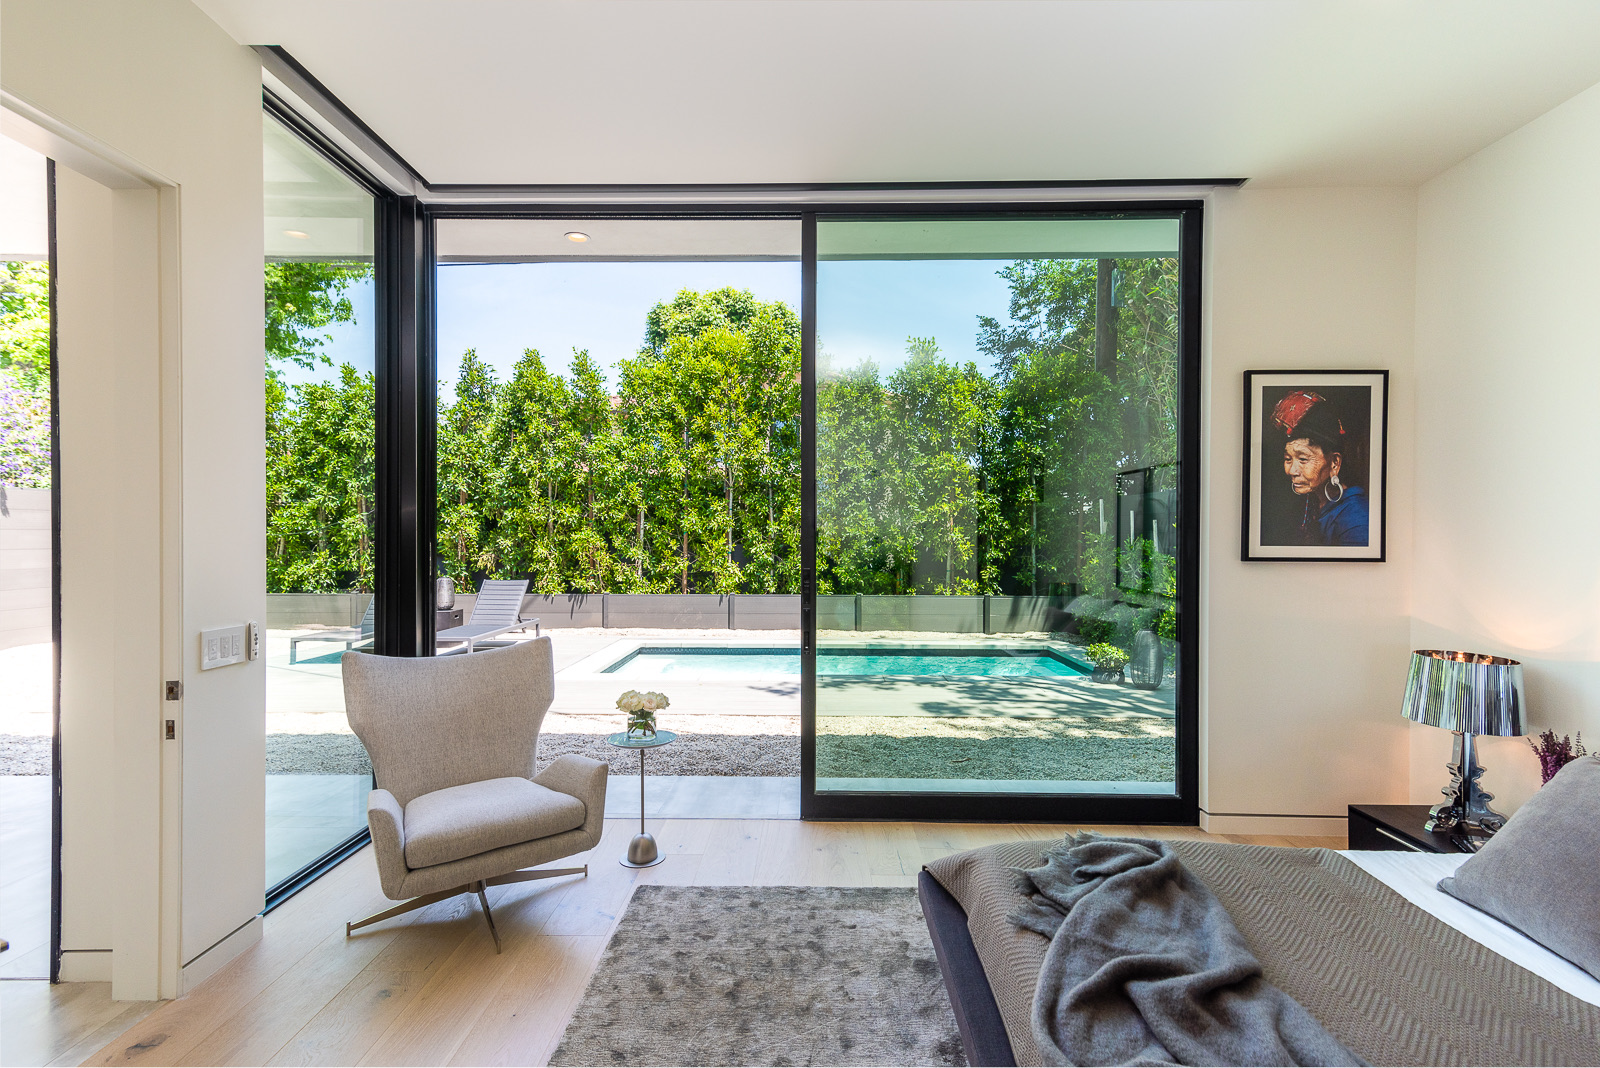 Luxury house windows outlook Beautiful | Ecay Design